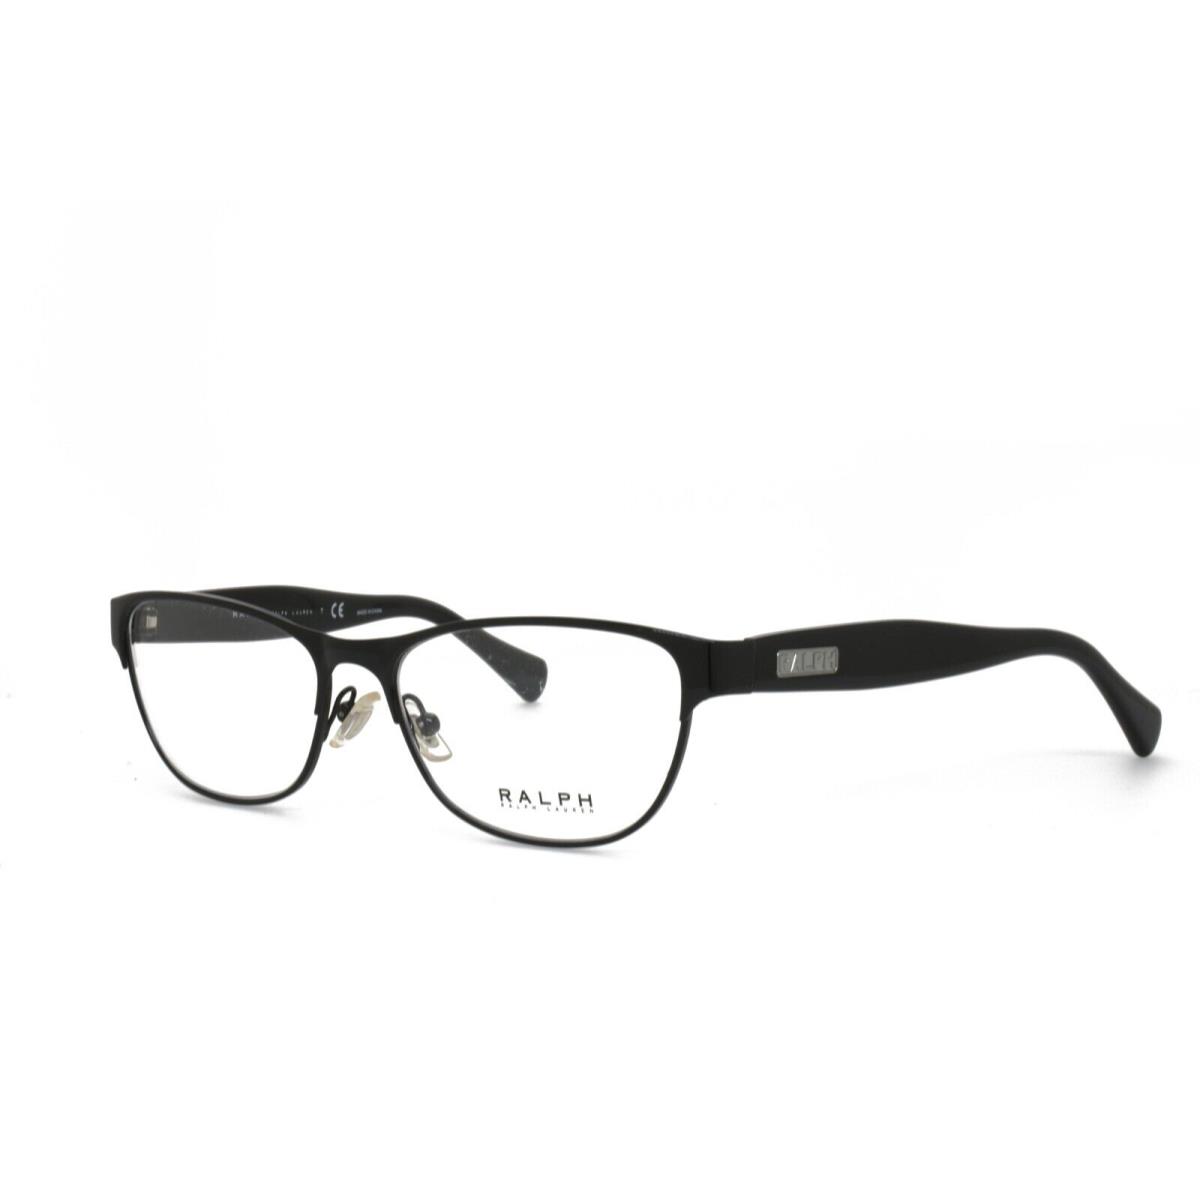 Ralph by Ralph Lauren 6043 131 52-15-135 Black Eyeglasses Frames